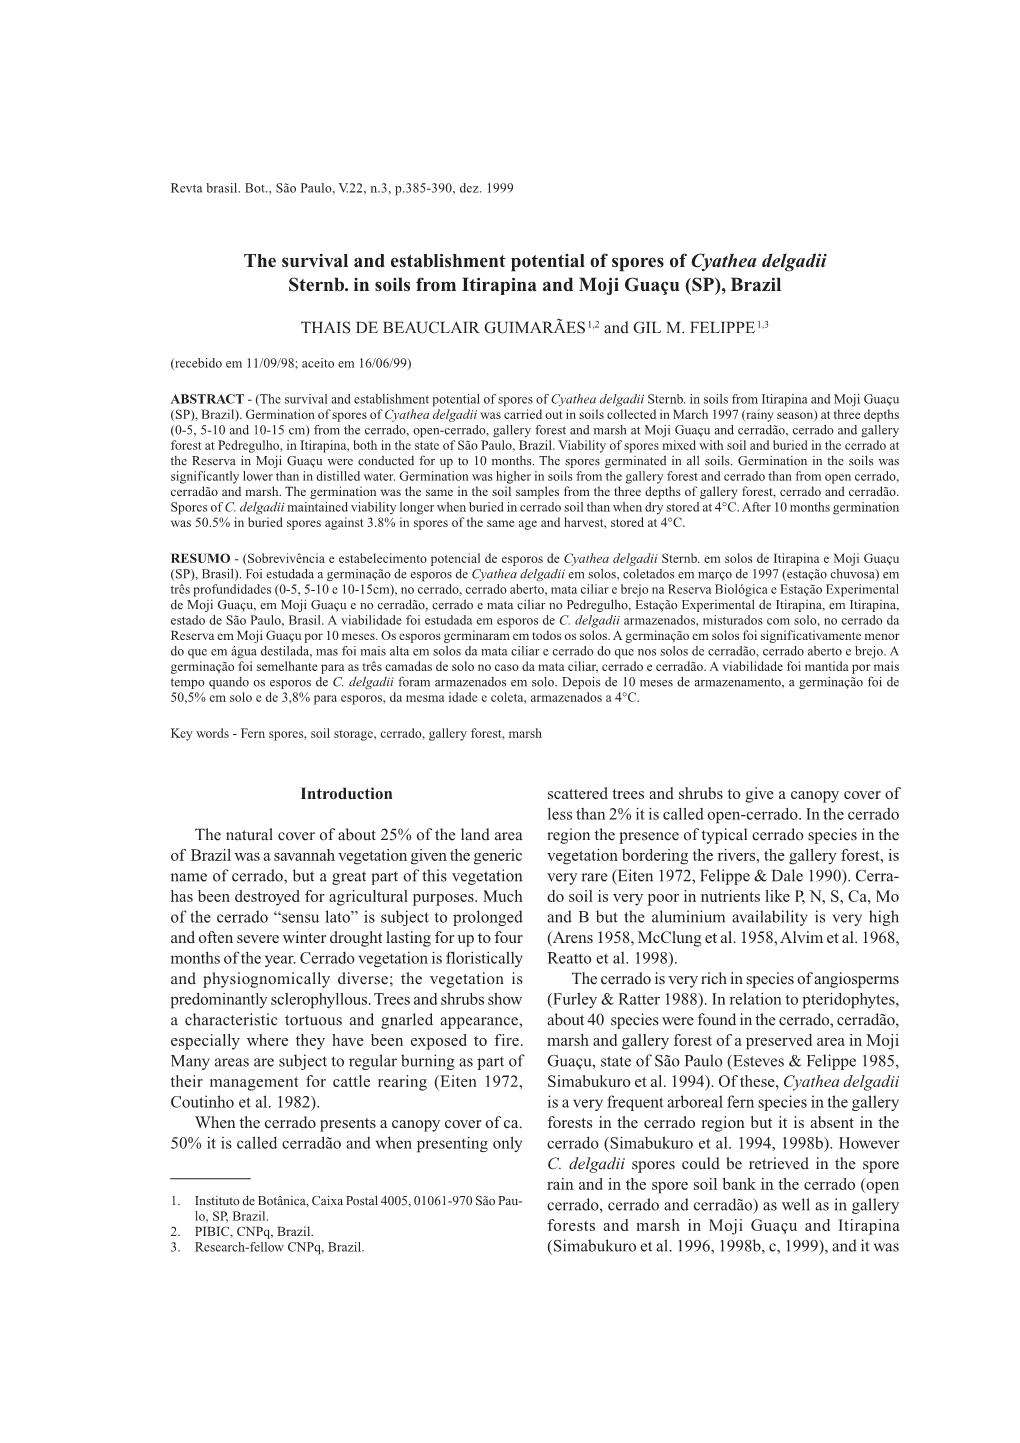 The Survival and Establishment Potential of Spores of Cyathea Delgadii Sternb. in Soils from Itirapina and Moji Guaçu (SP), Brazil